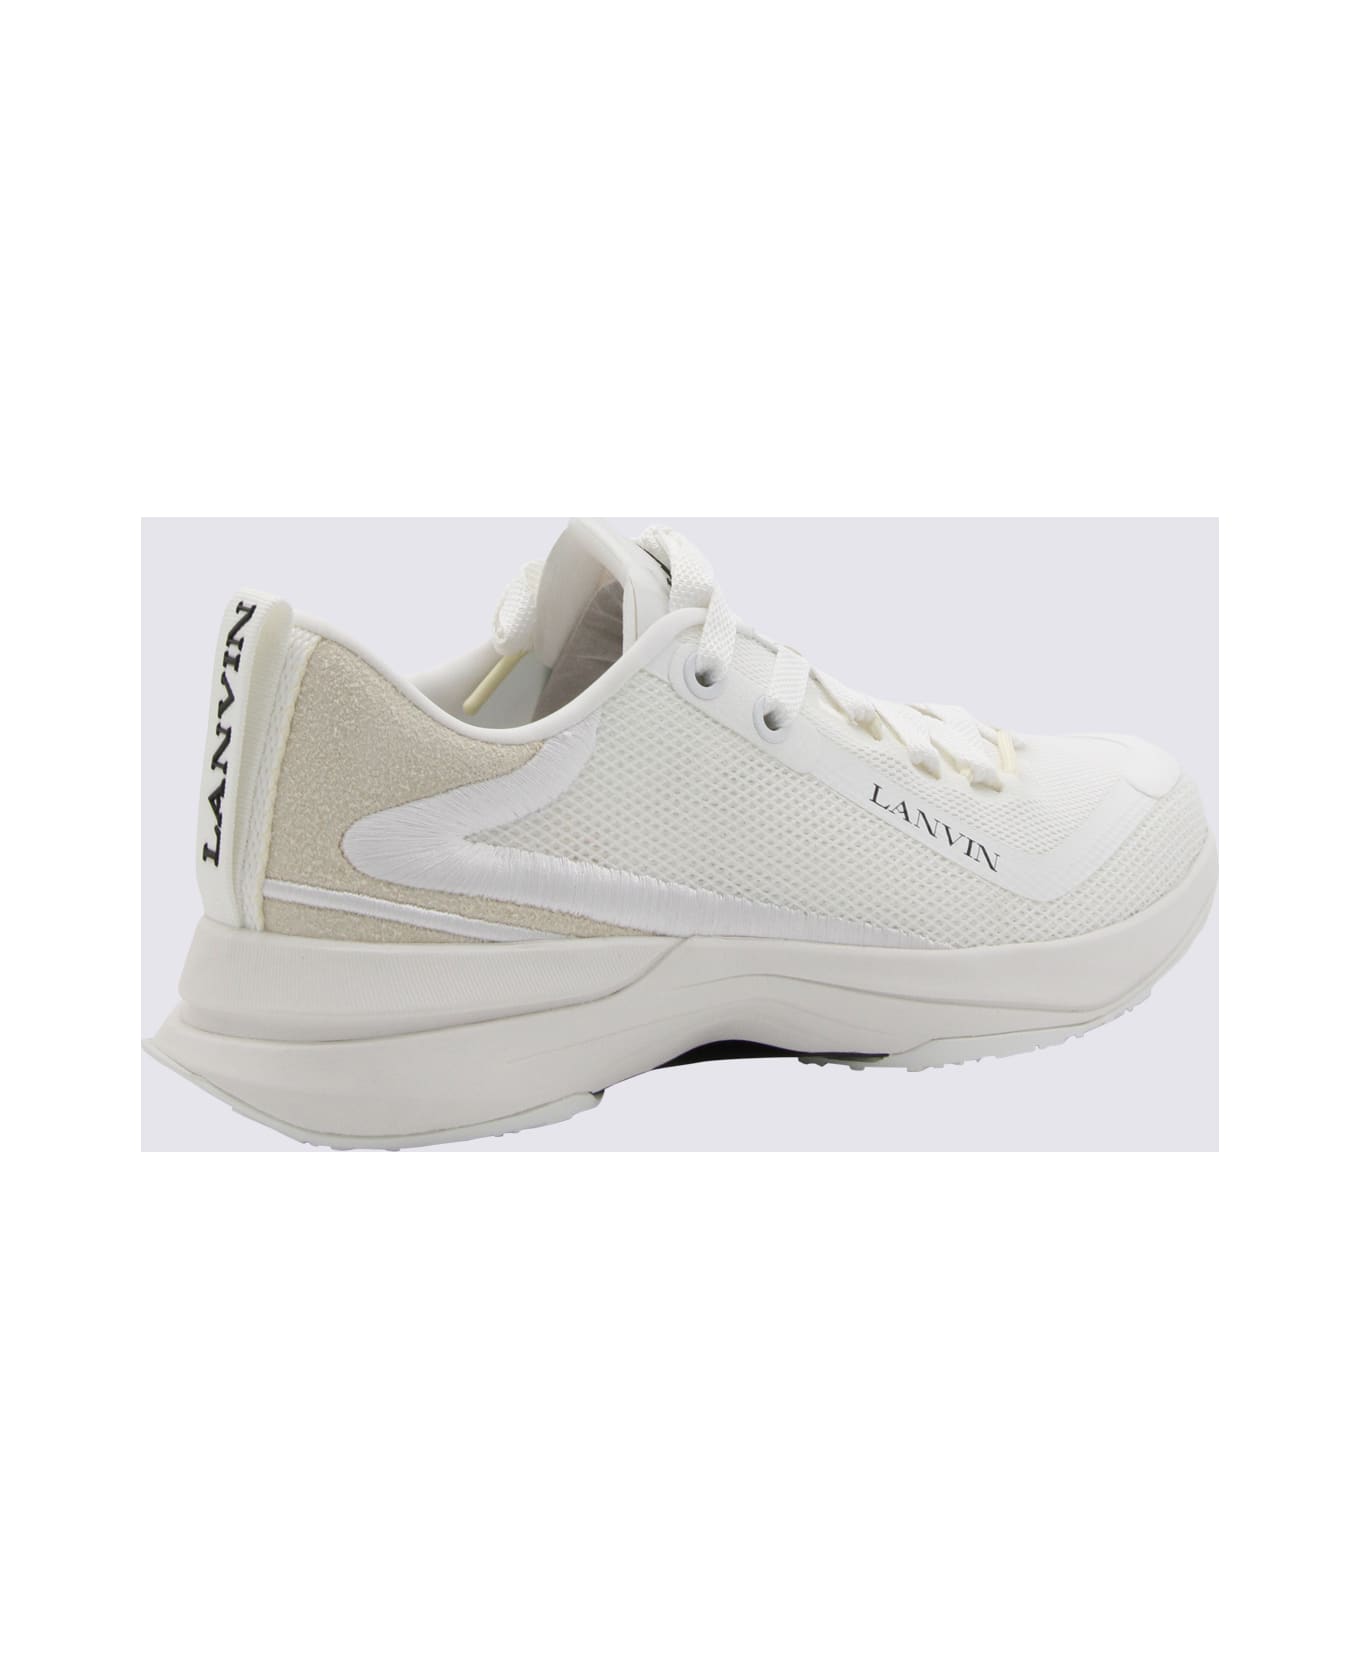 Lanvin White Leather Sneakers - White